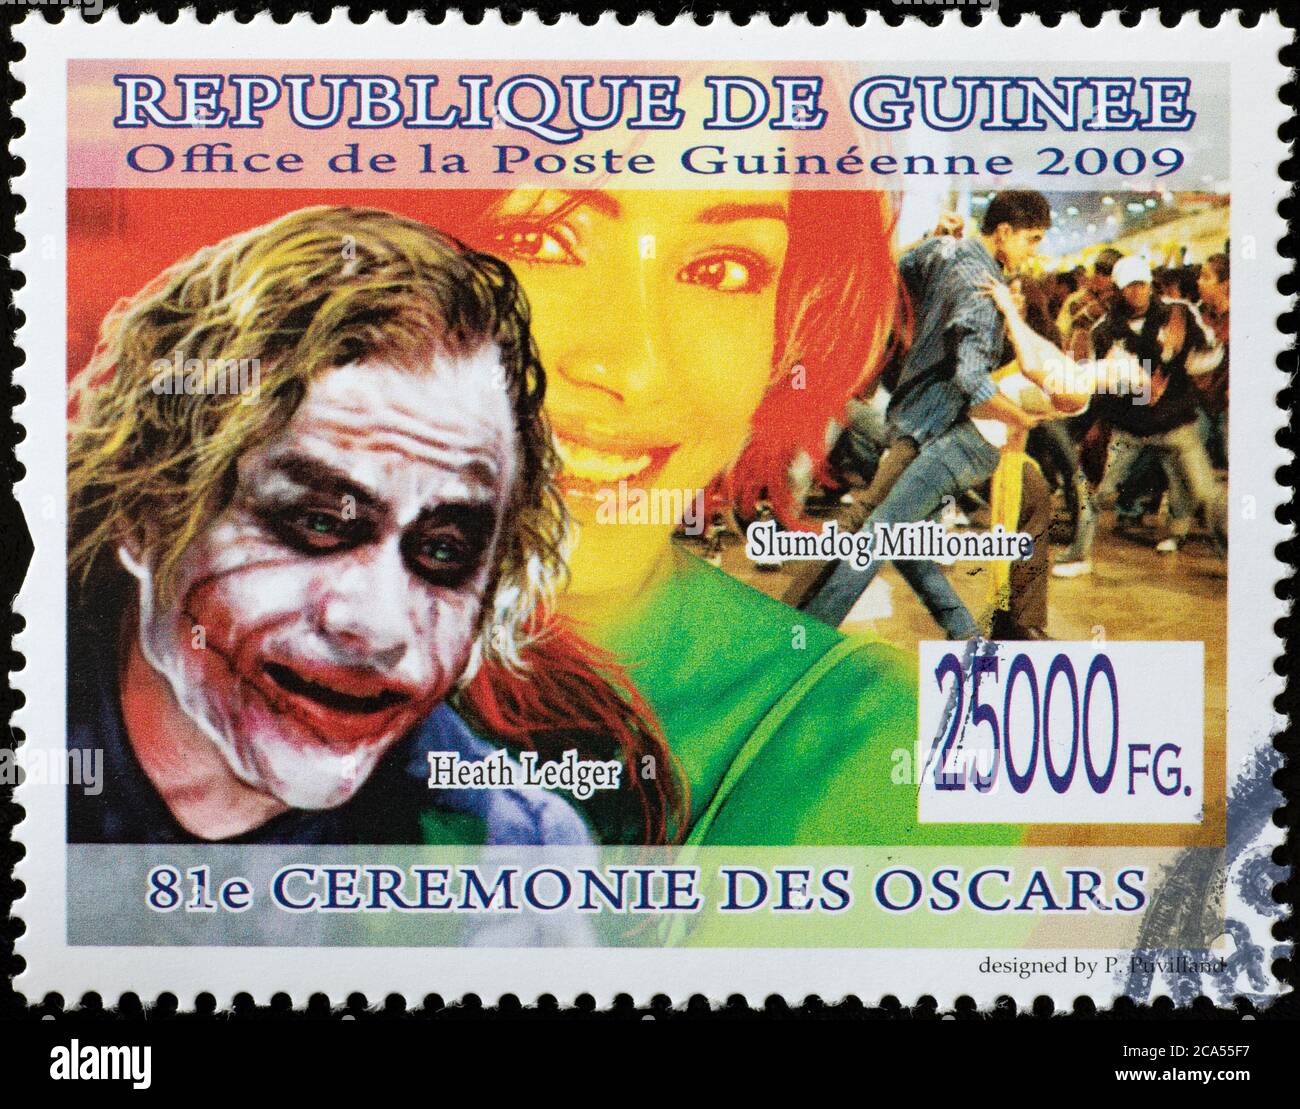 Heath Ledger as the Joker on postage stamp Stock Photo